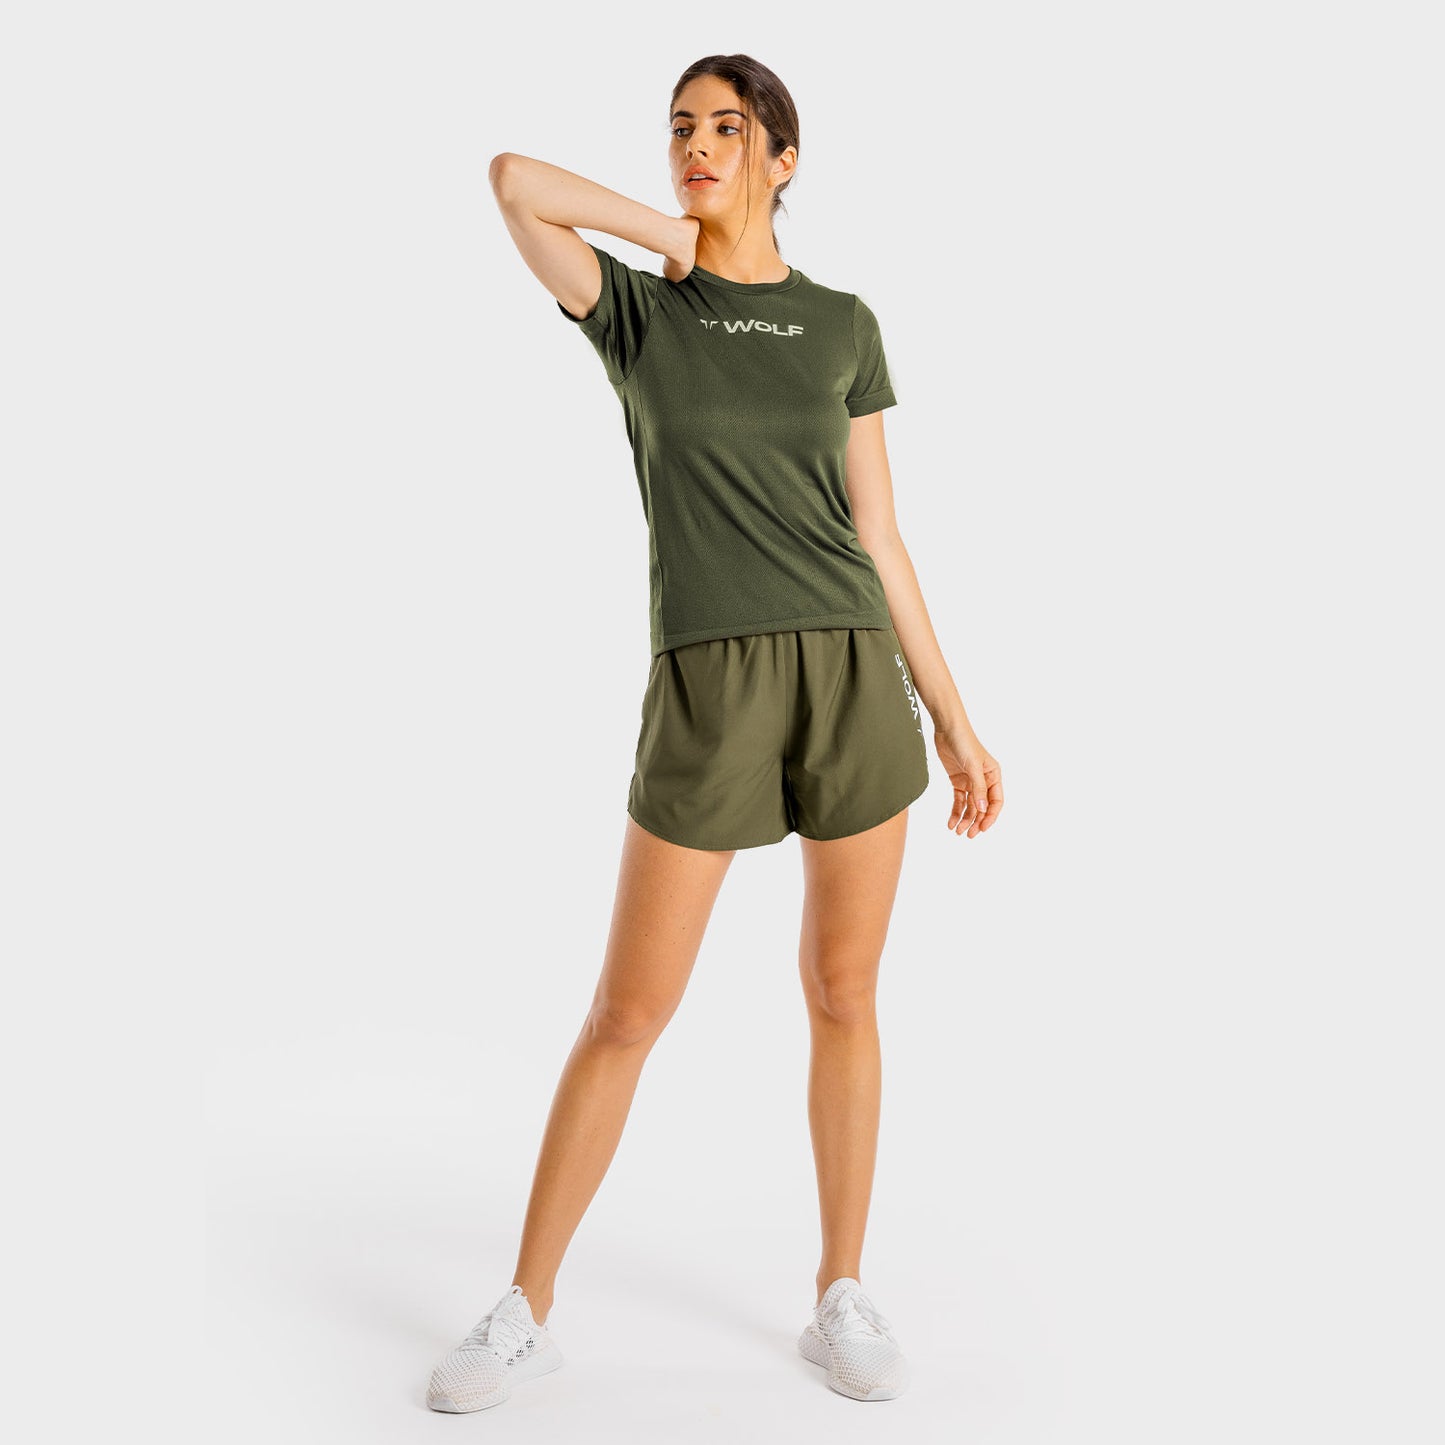 squatwolf-gym-t-shirts-for-women-primal-tee-khaki-workout-clothes